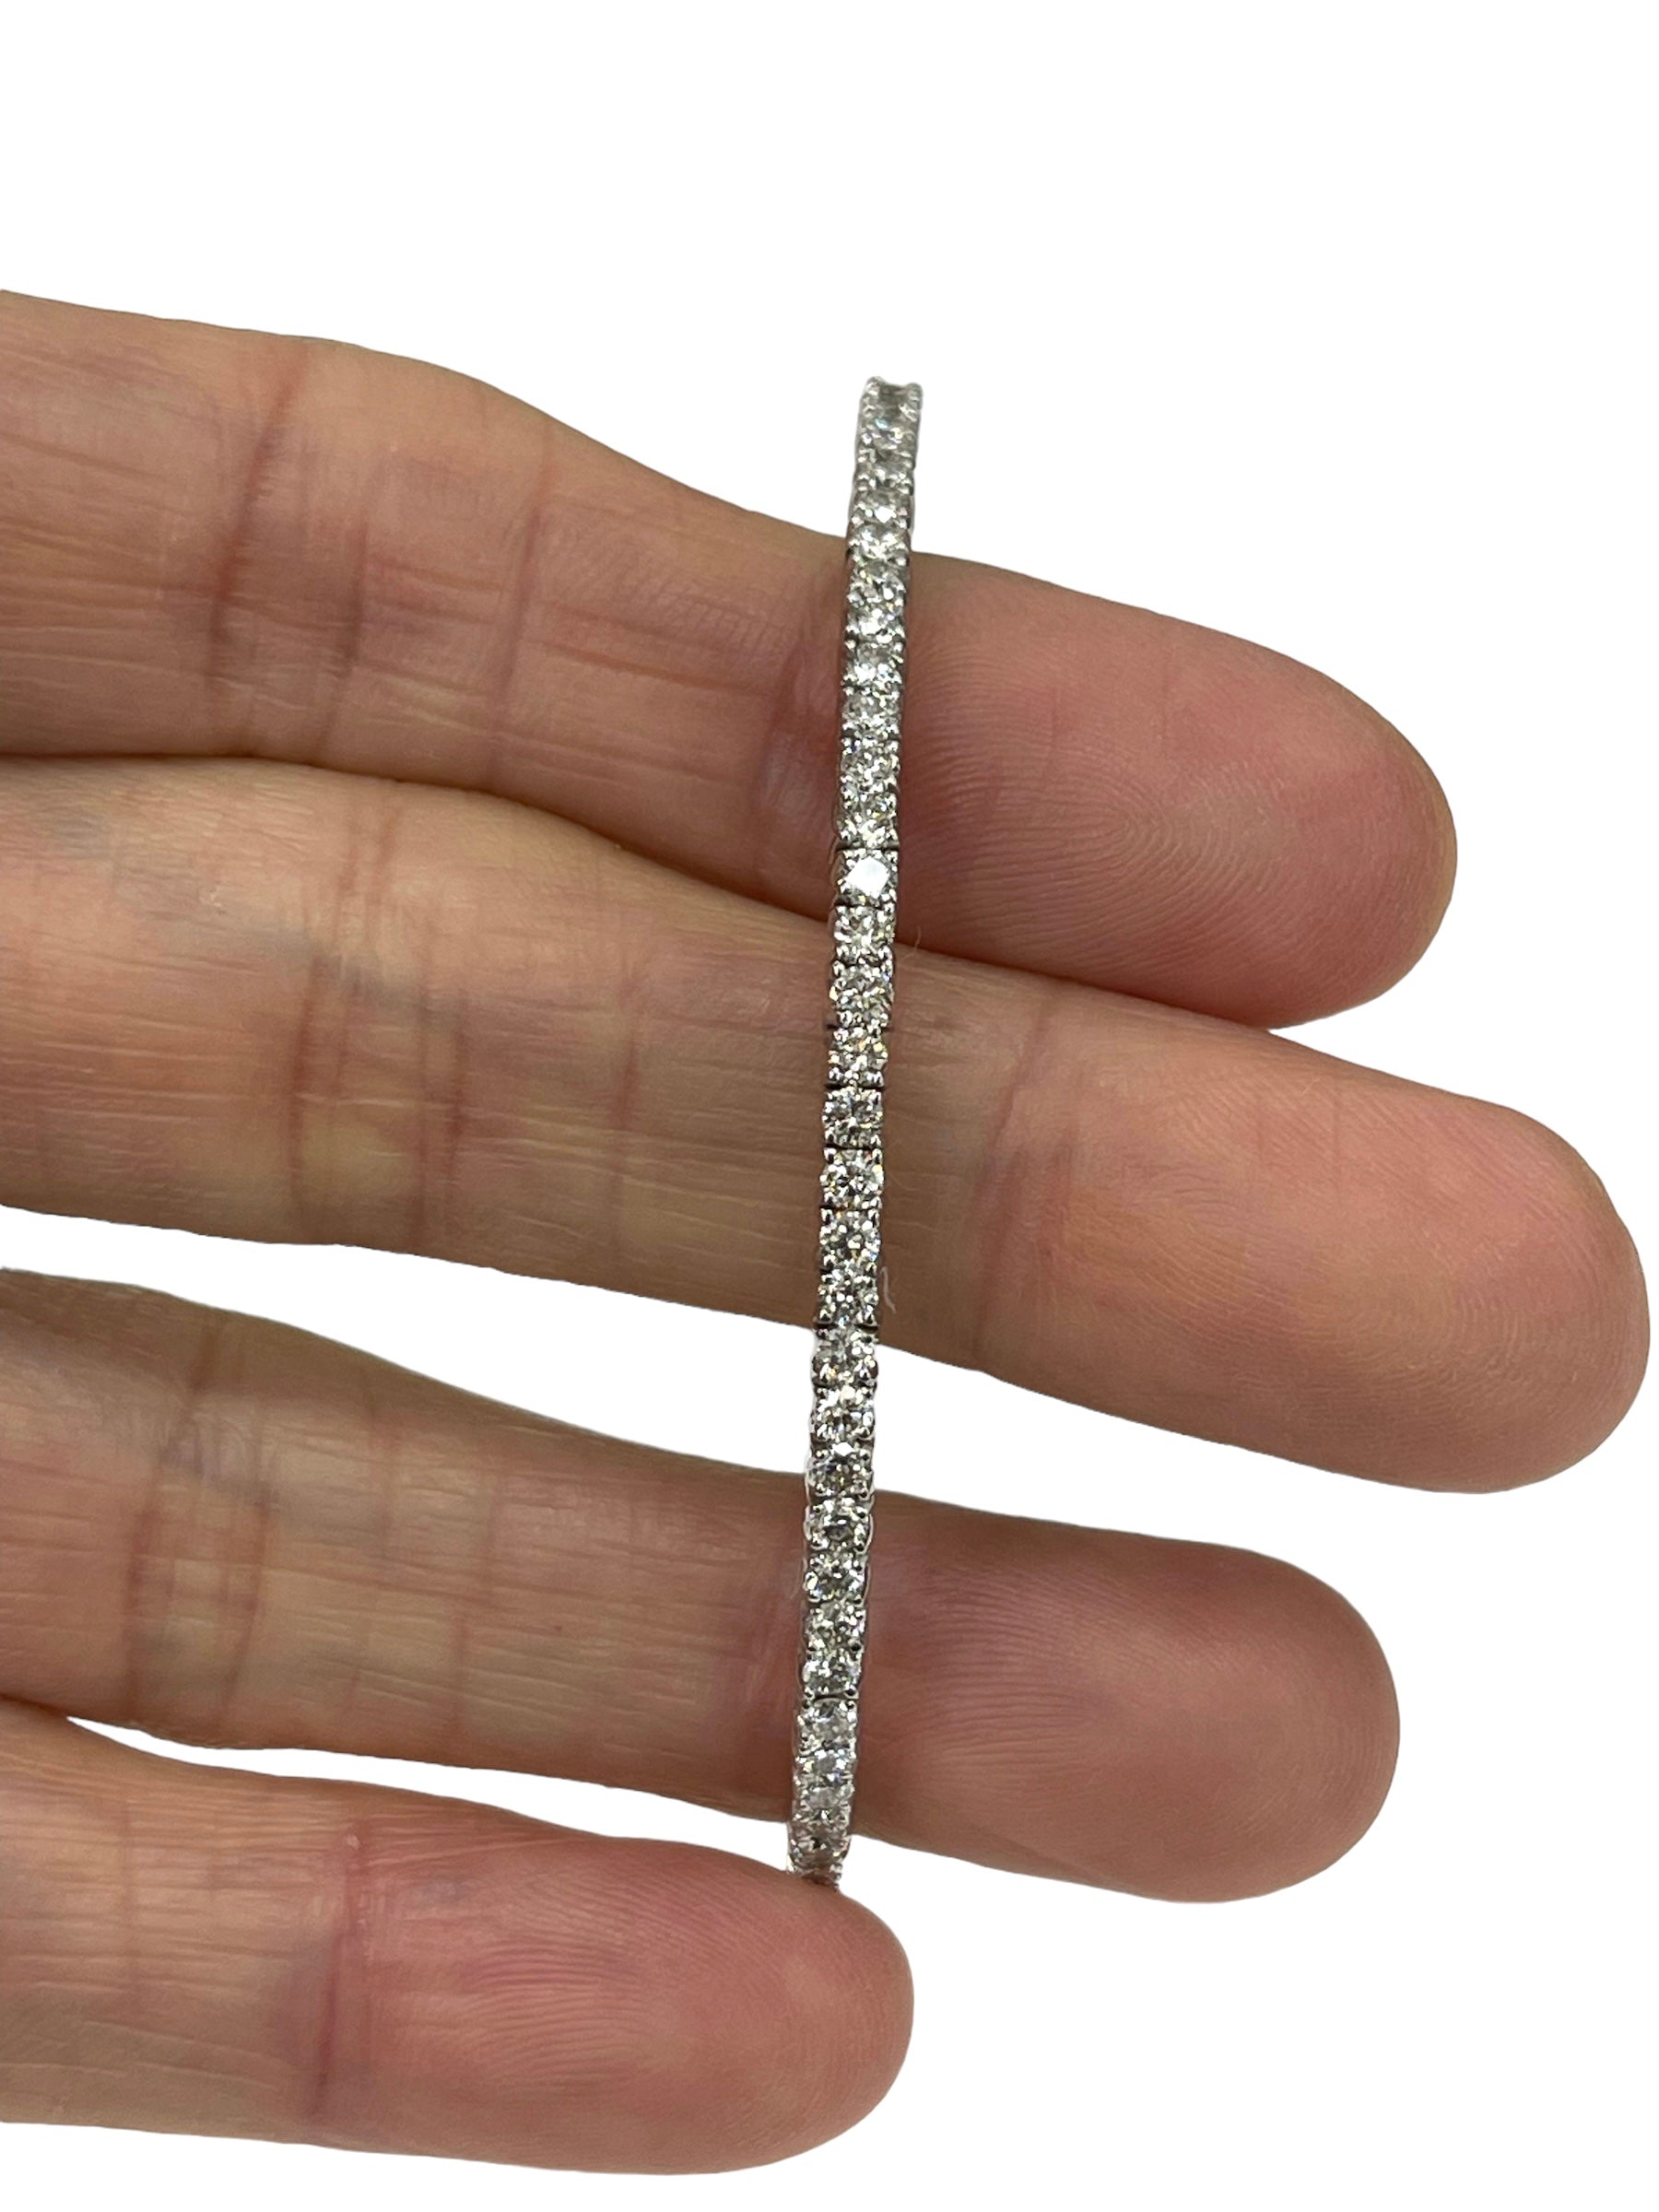 Flexi Bangle Round Brilliant Eternity Diamond Bracelet White Gold 14kt